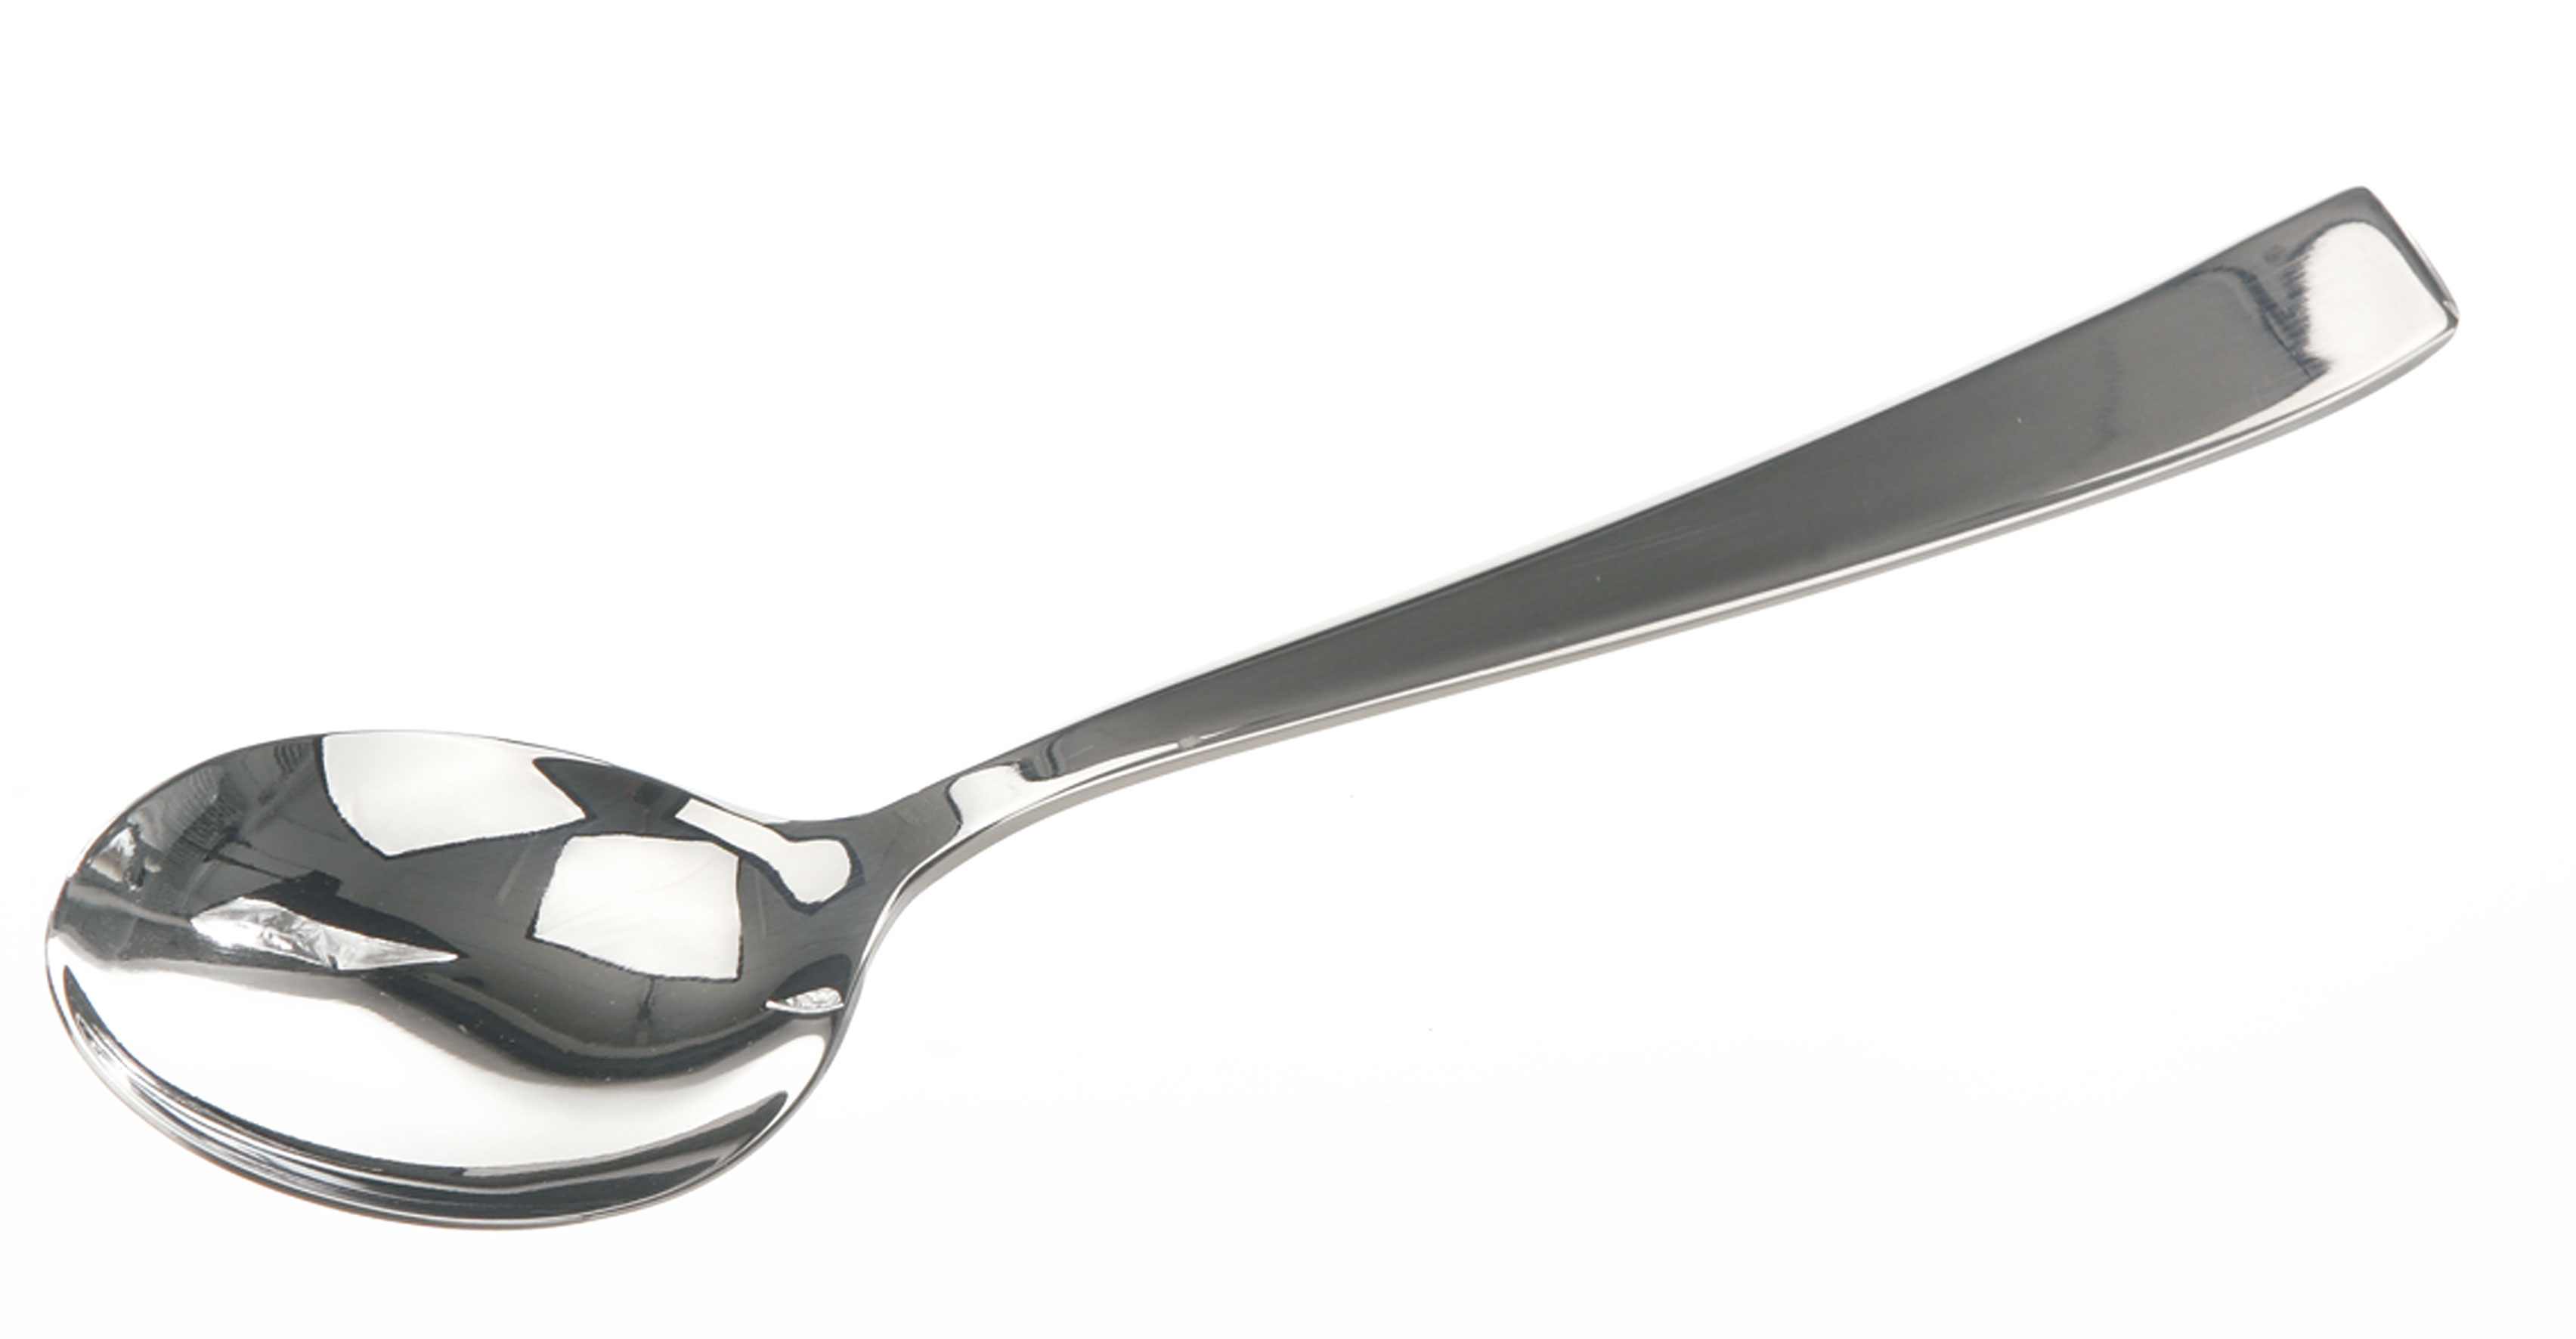 Laboratory spoon. Length (mm): 180. Spatula (mm): 38x55